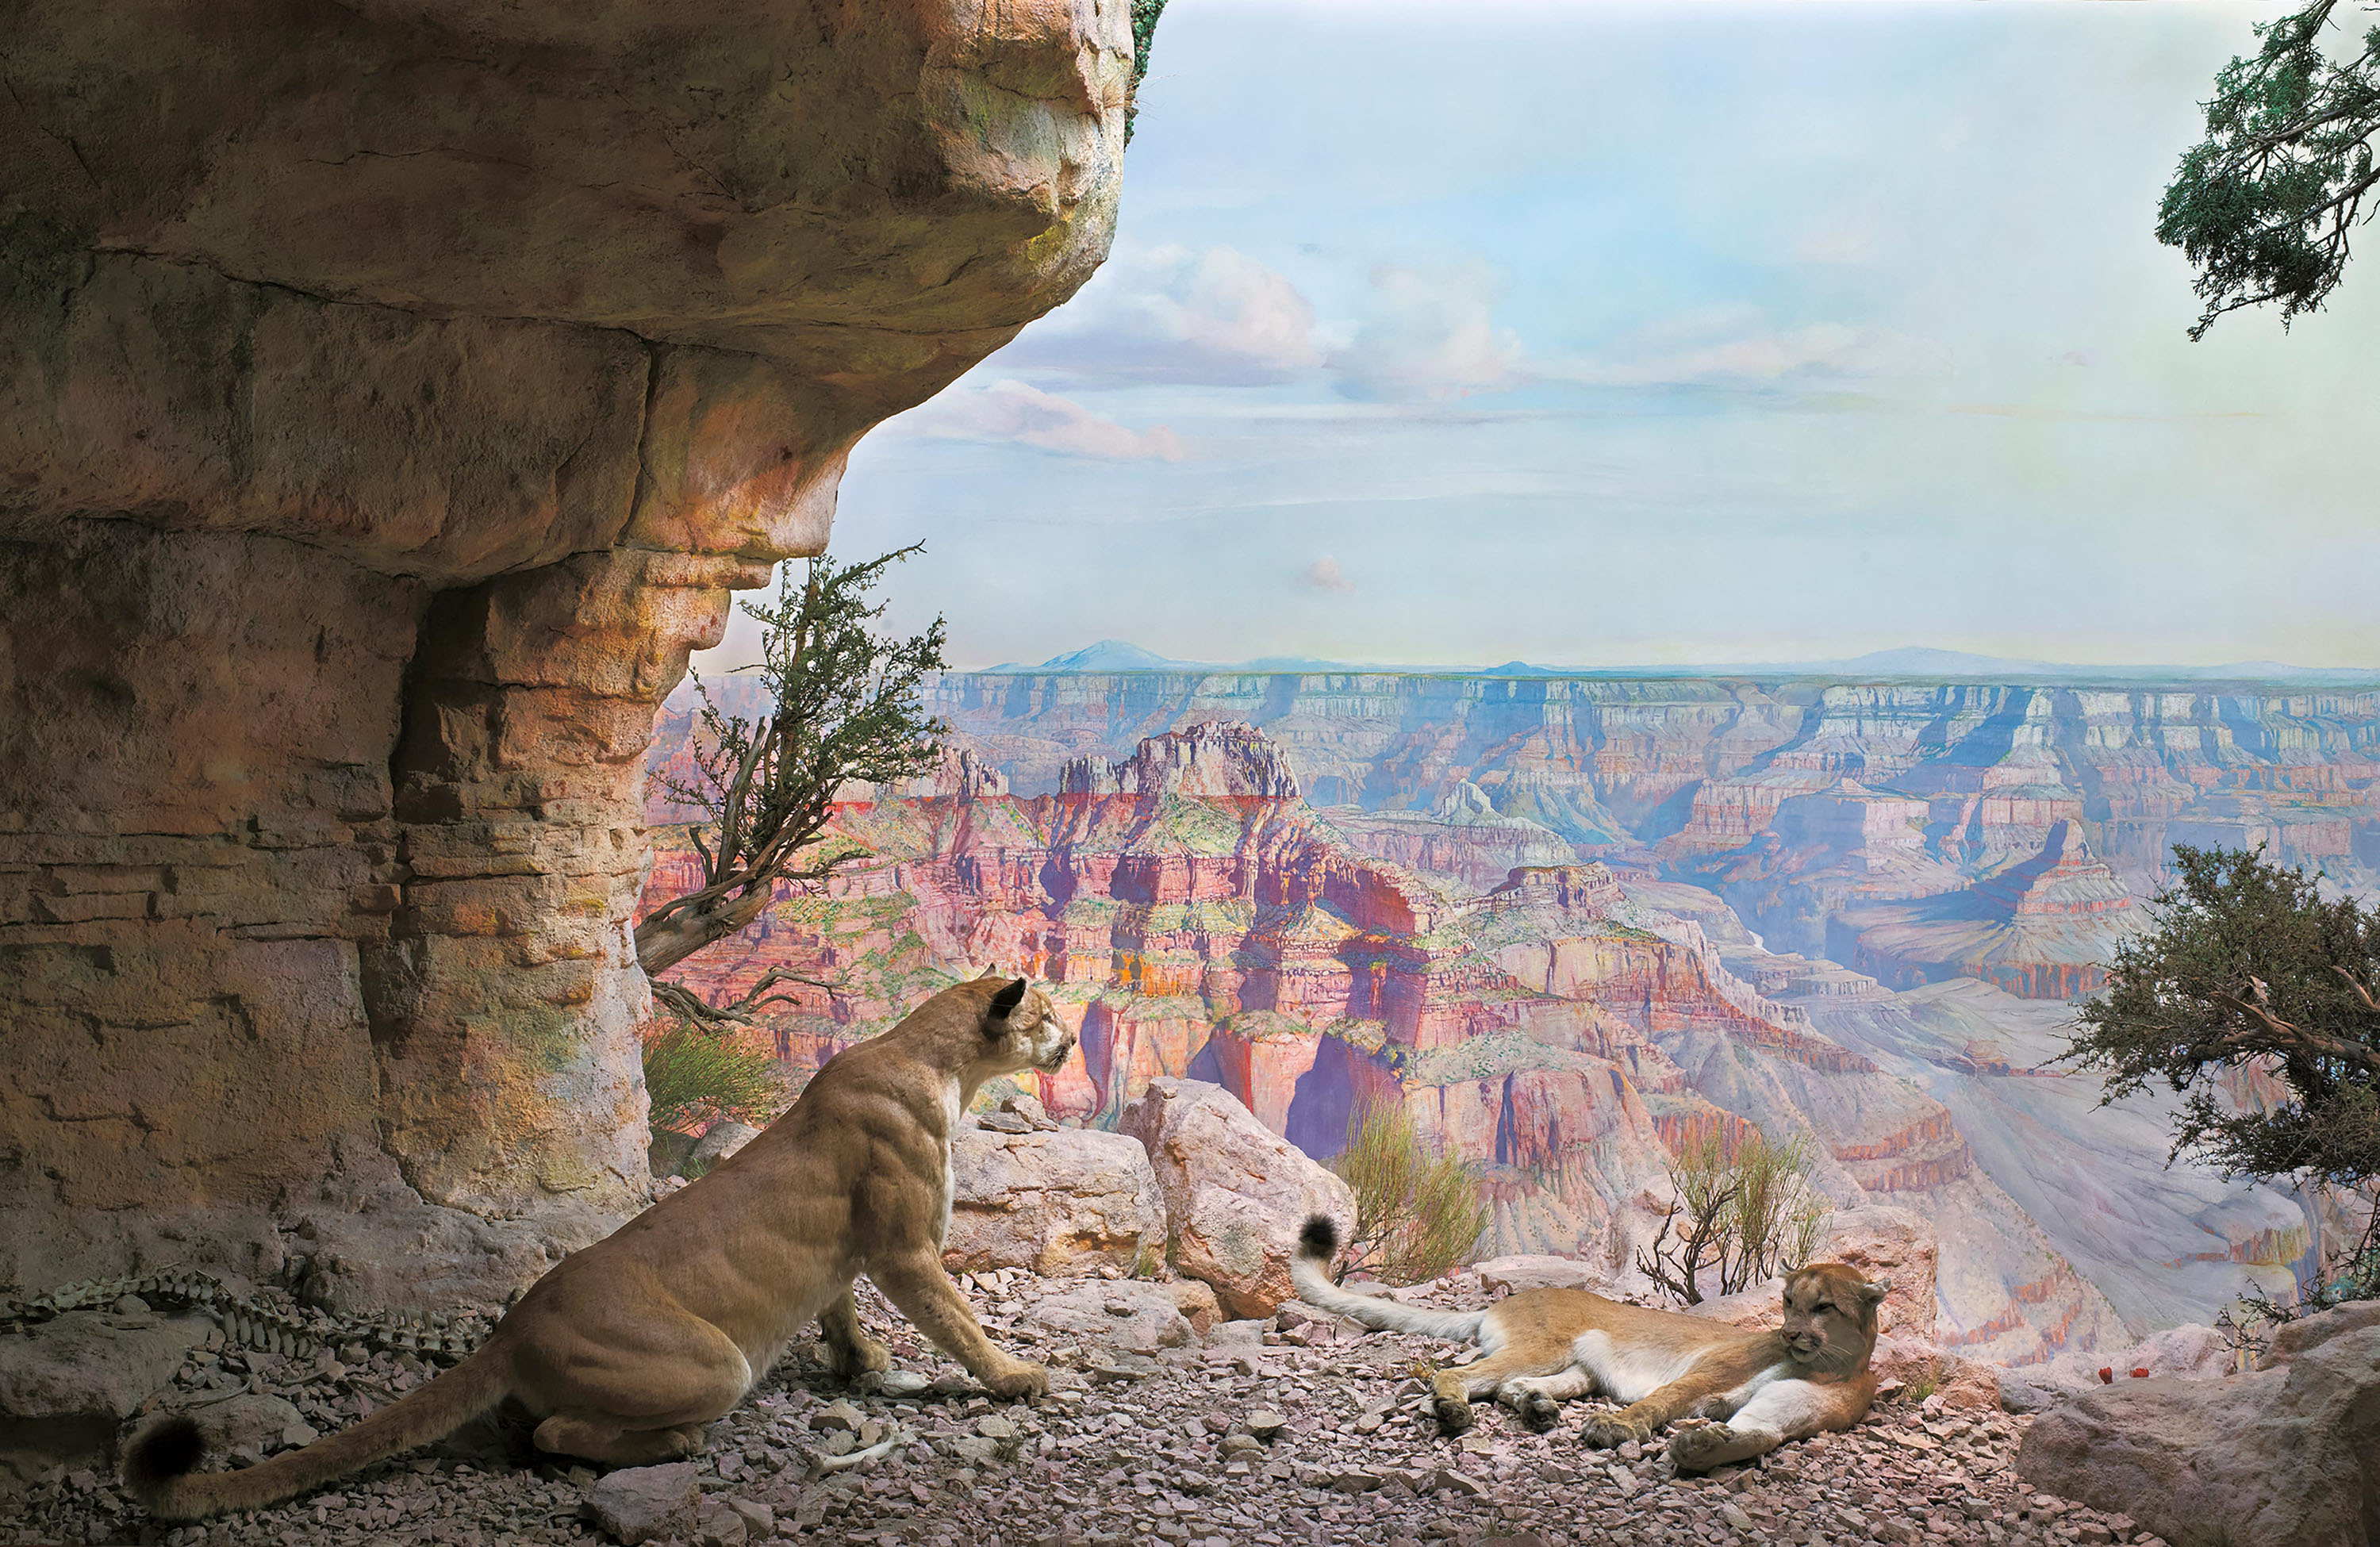 Grand Canyon diorama